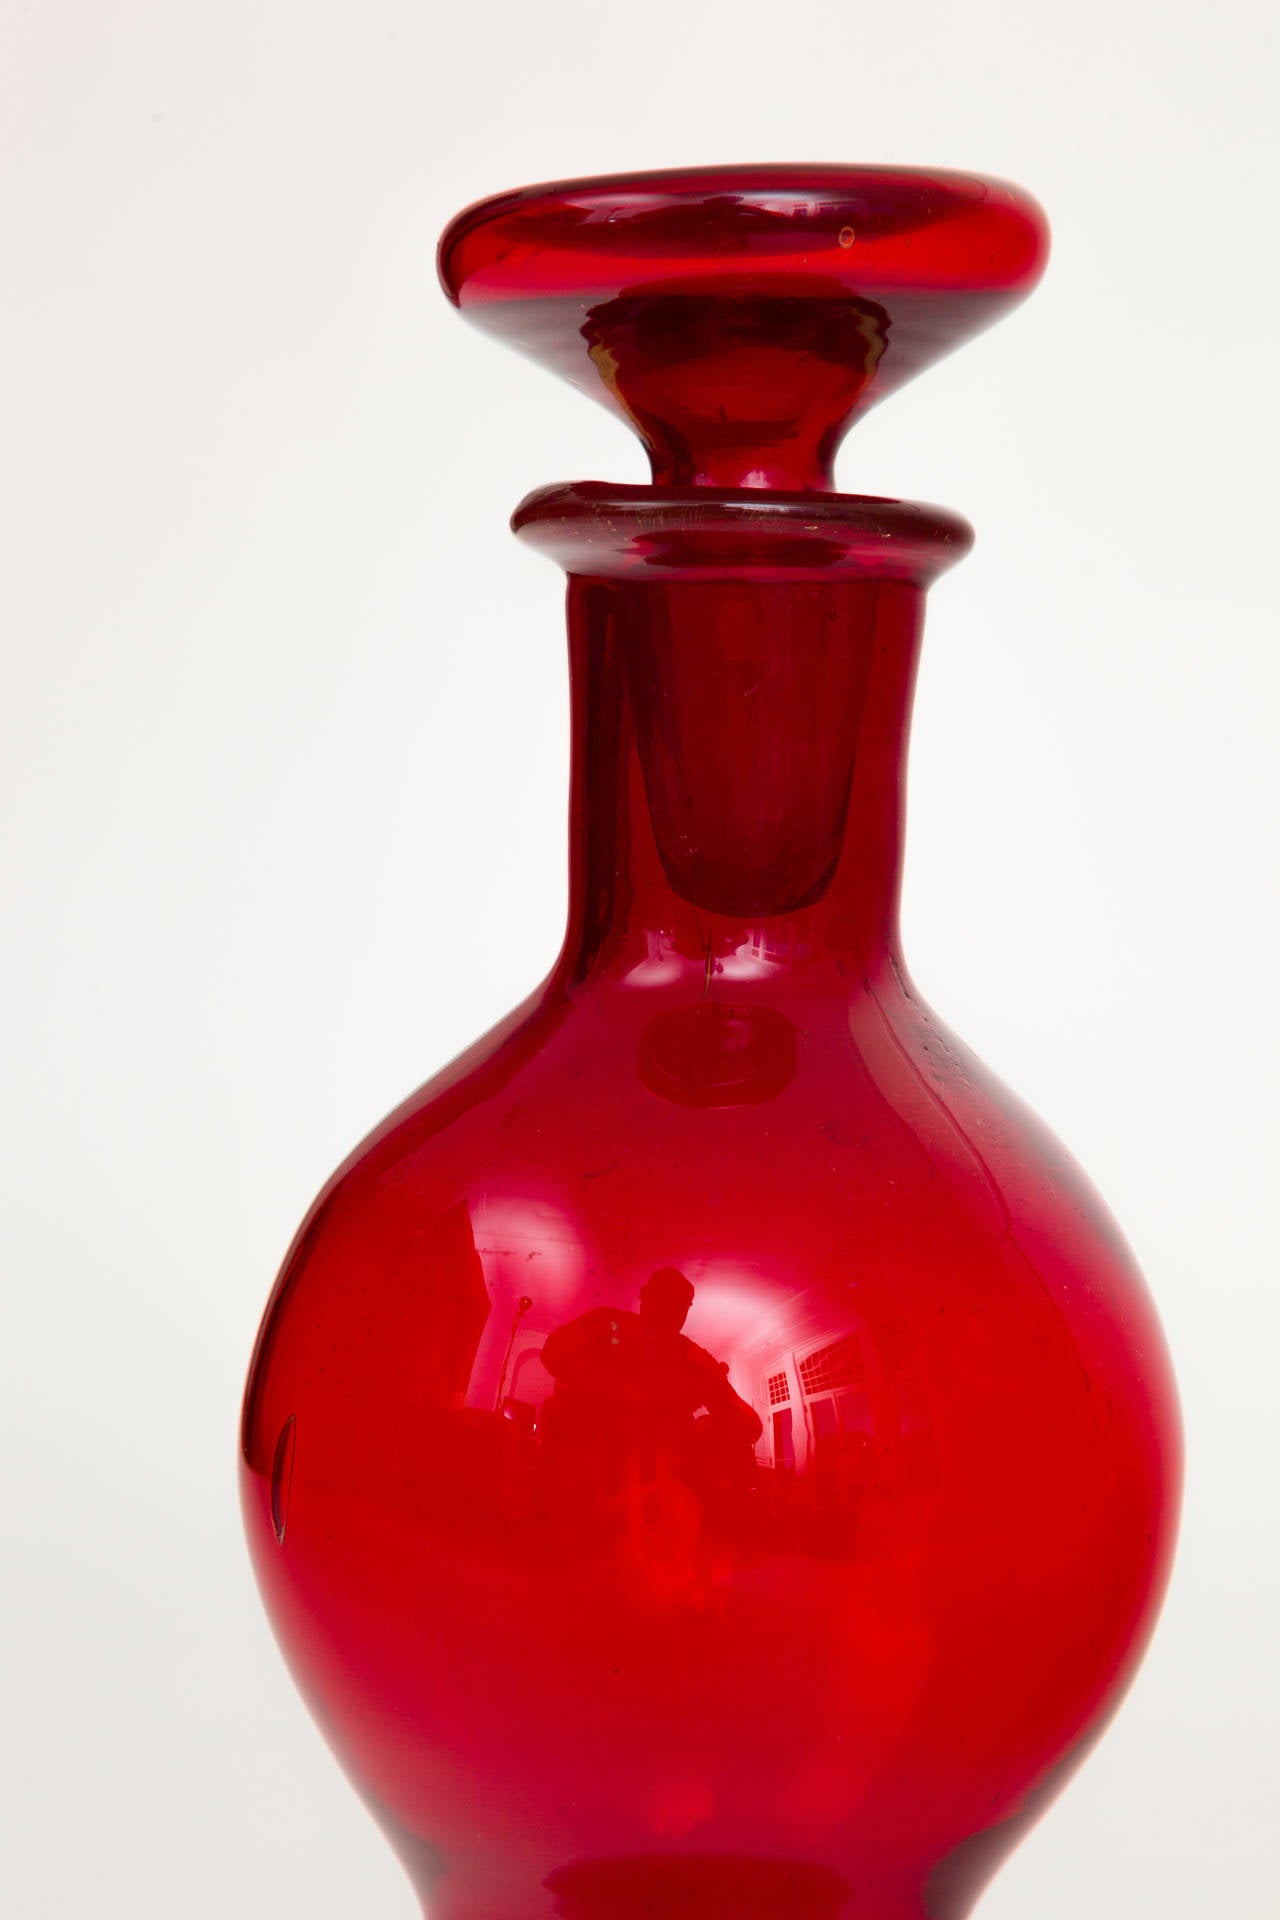 Rare red glass Blenko decanter bottle with blown glass disc stopper, USA, circa 1958.